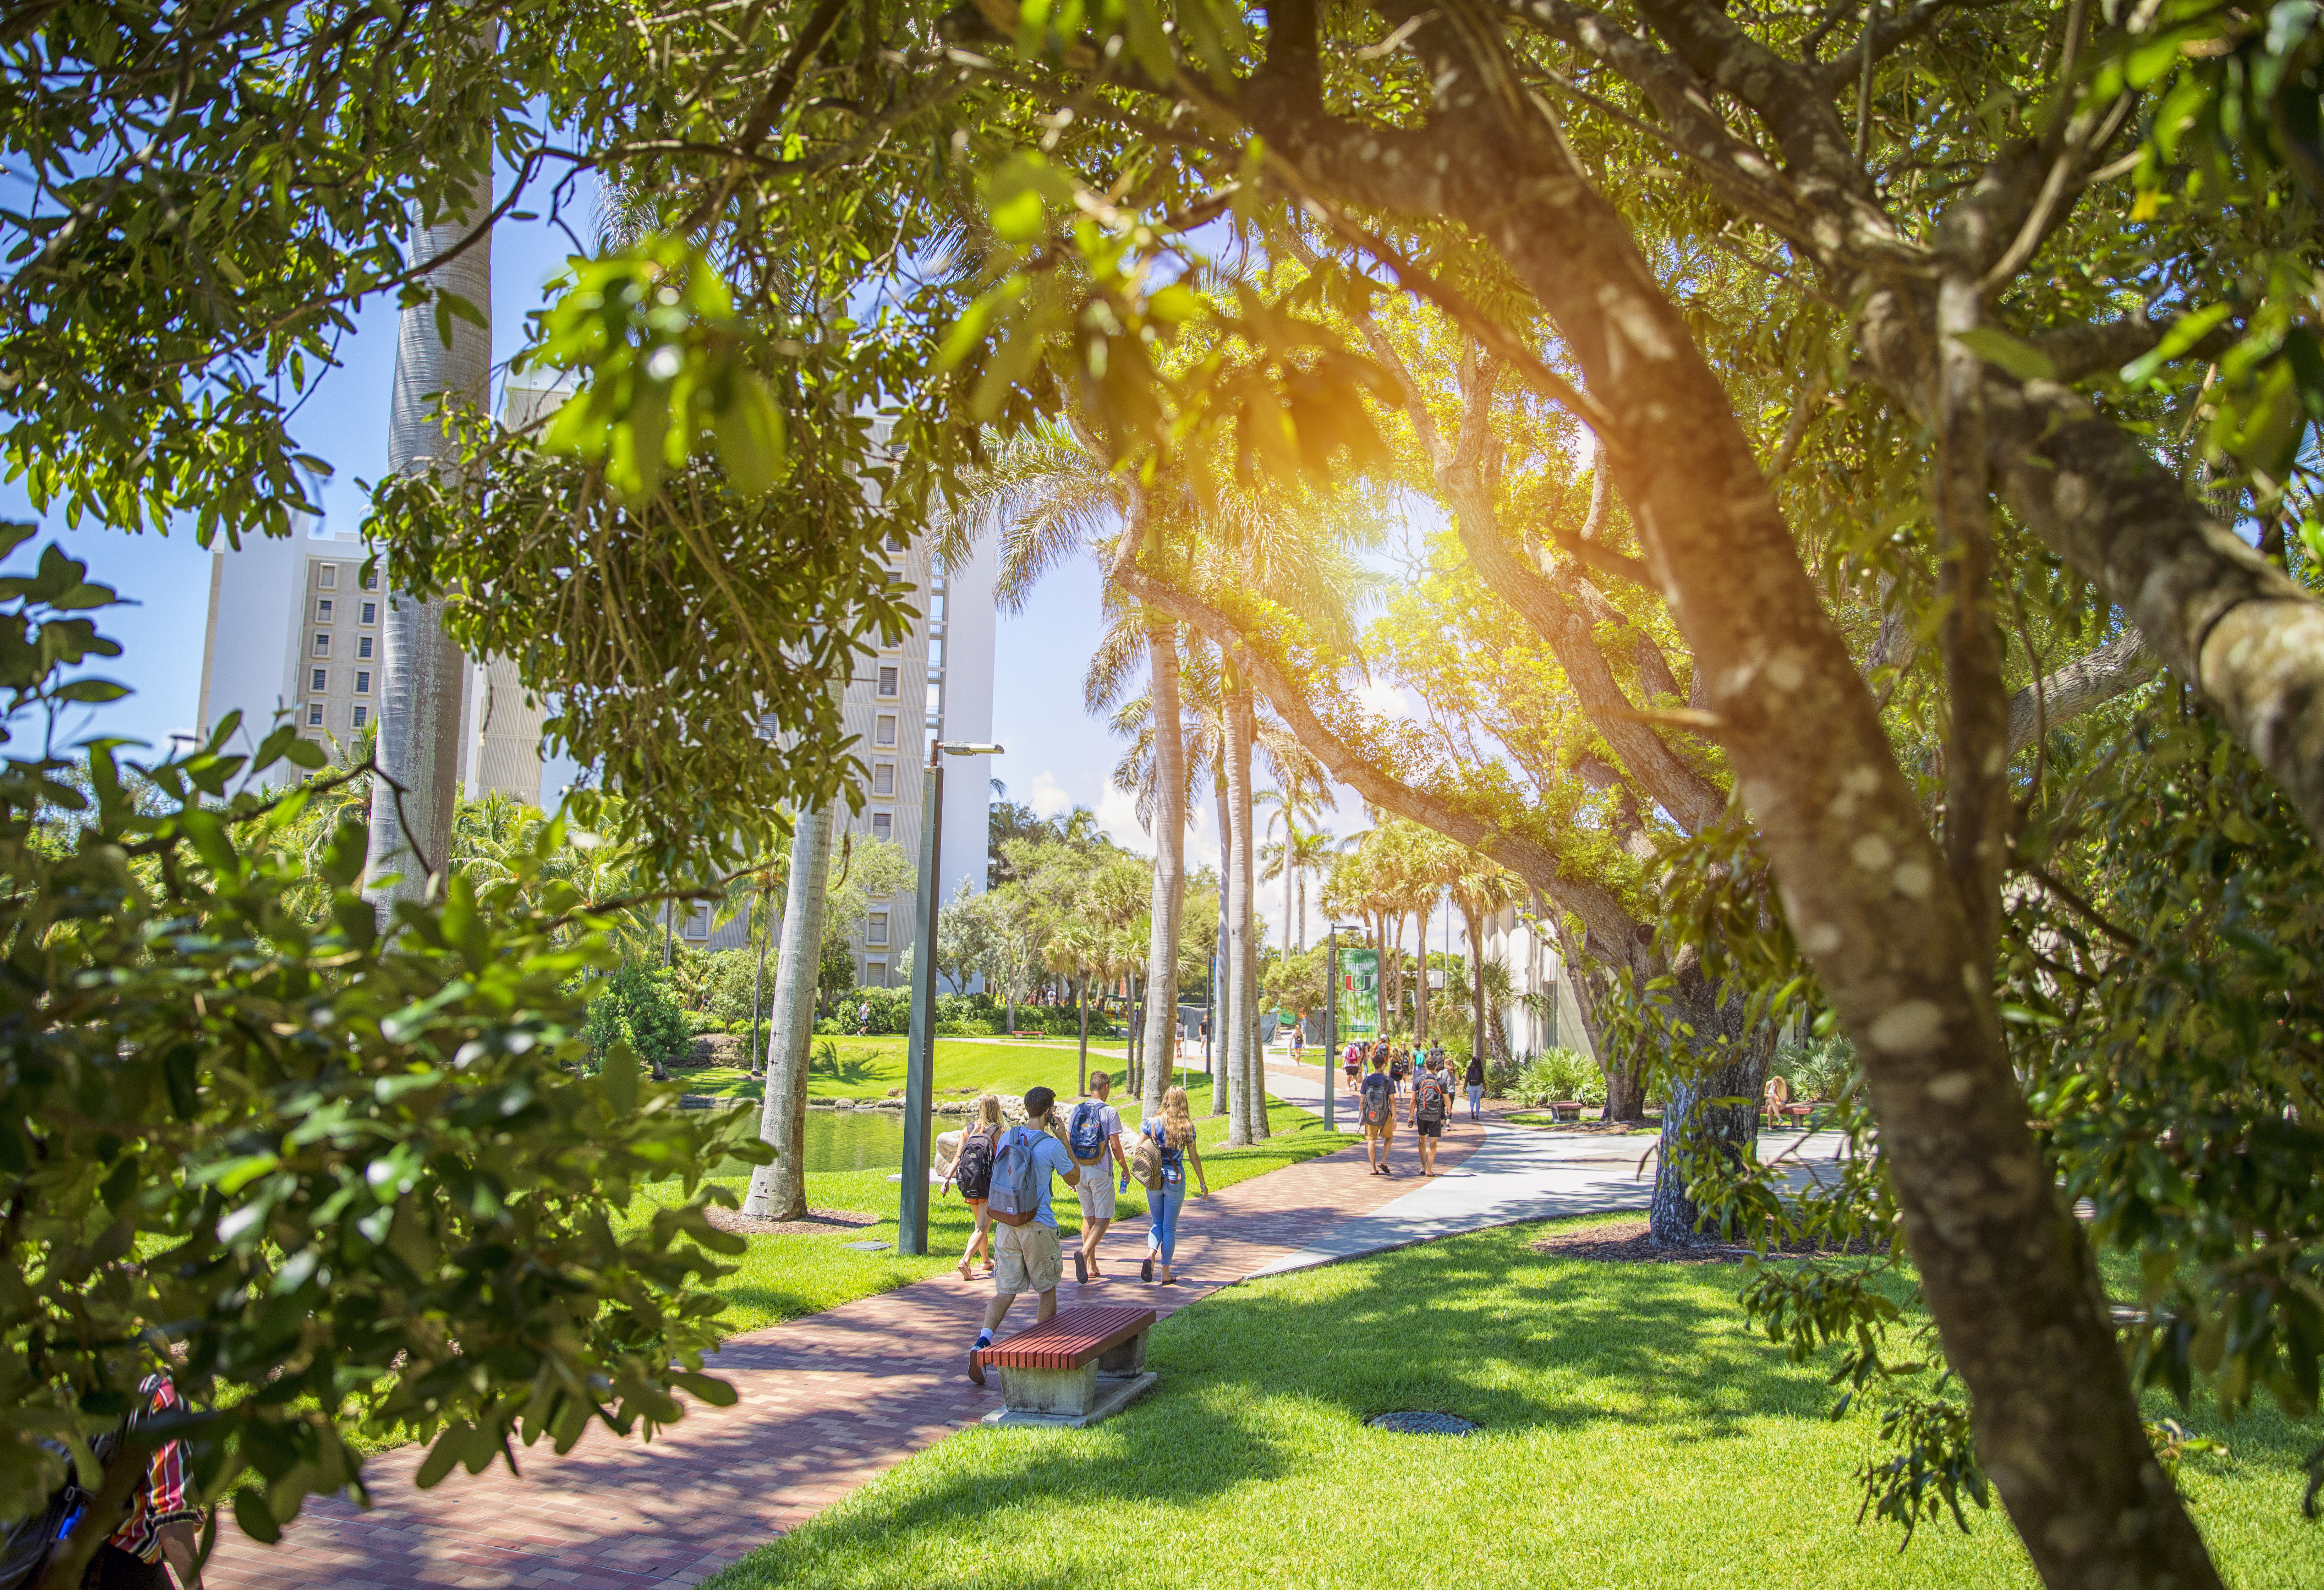 Students walking through the University of Miami campus.